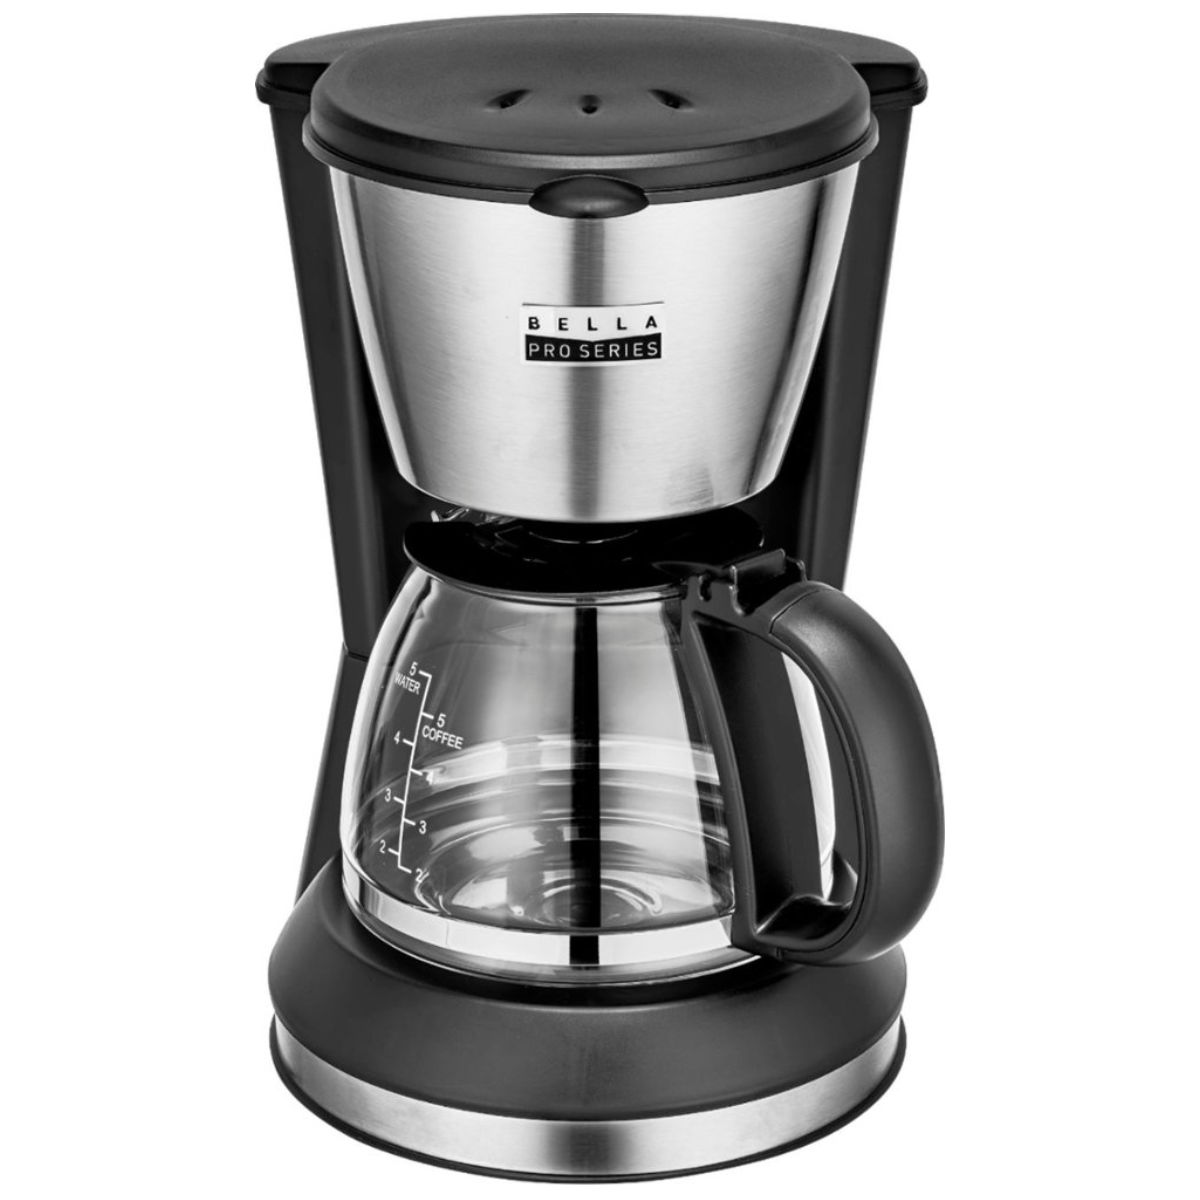 Bella 90071 Pro Series 5-Cup Coffee Maker